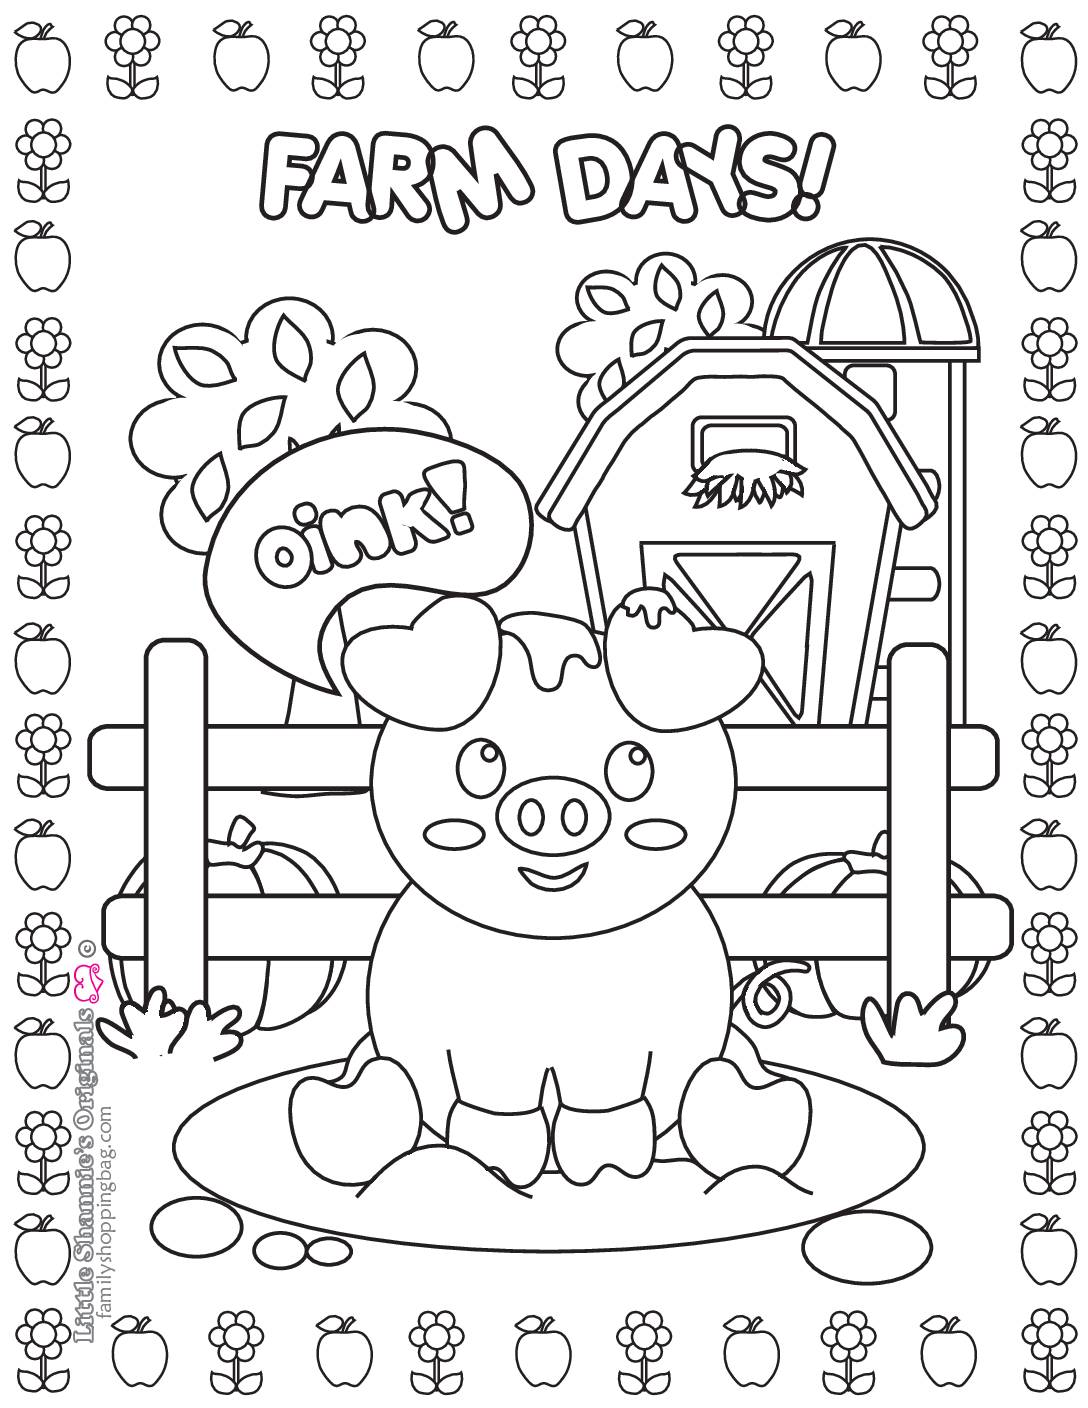 Coloring Page 4 Farm